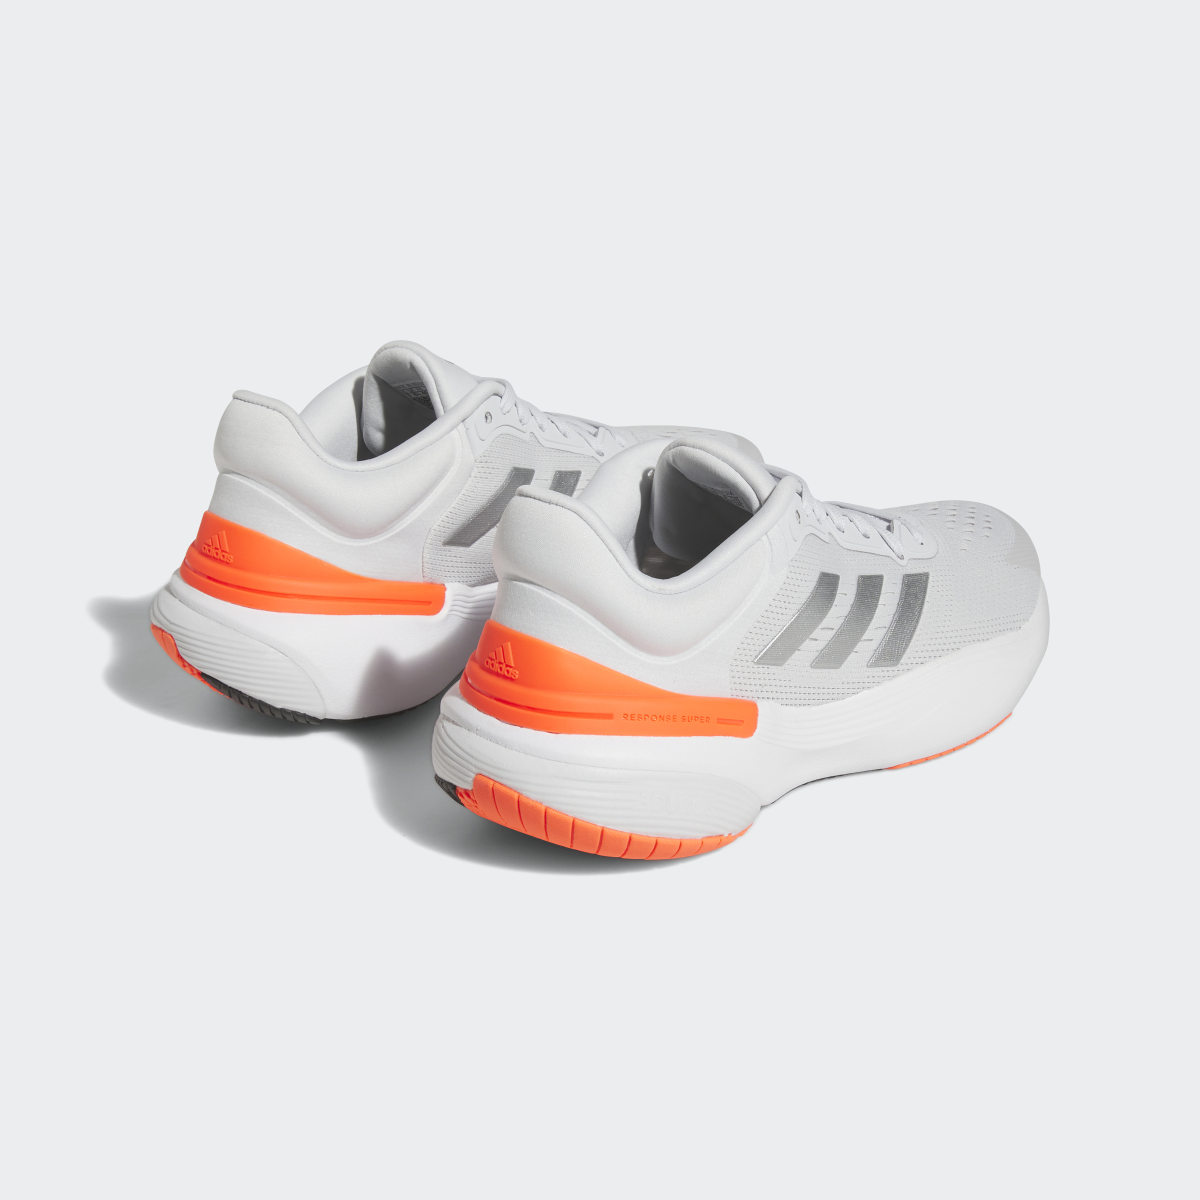 Adidas Response Super 3.0 Shoes. 6